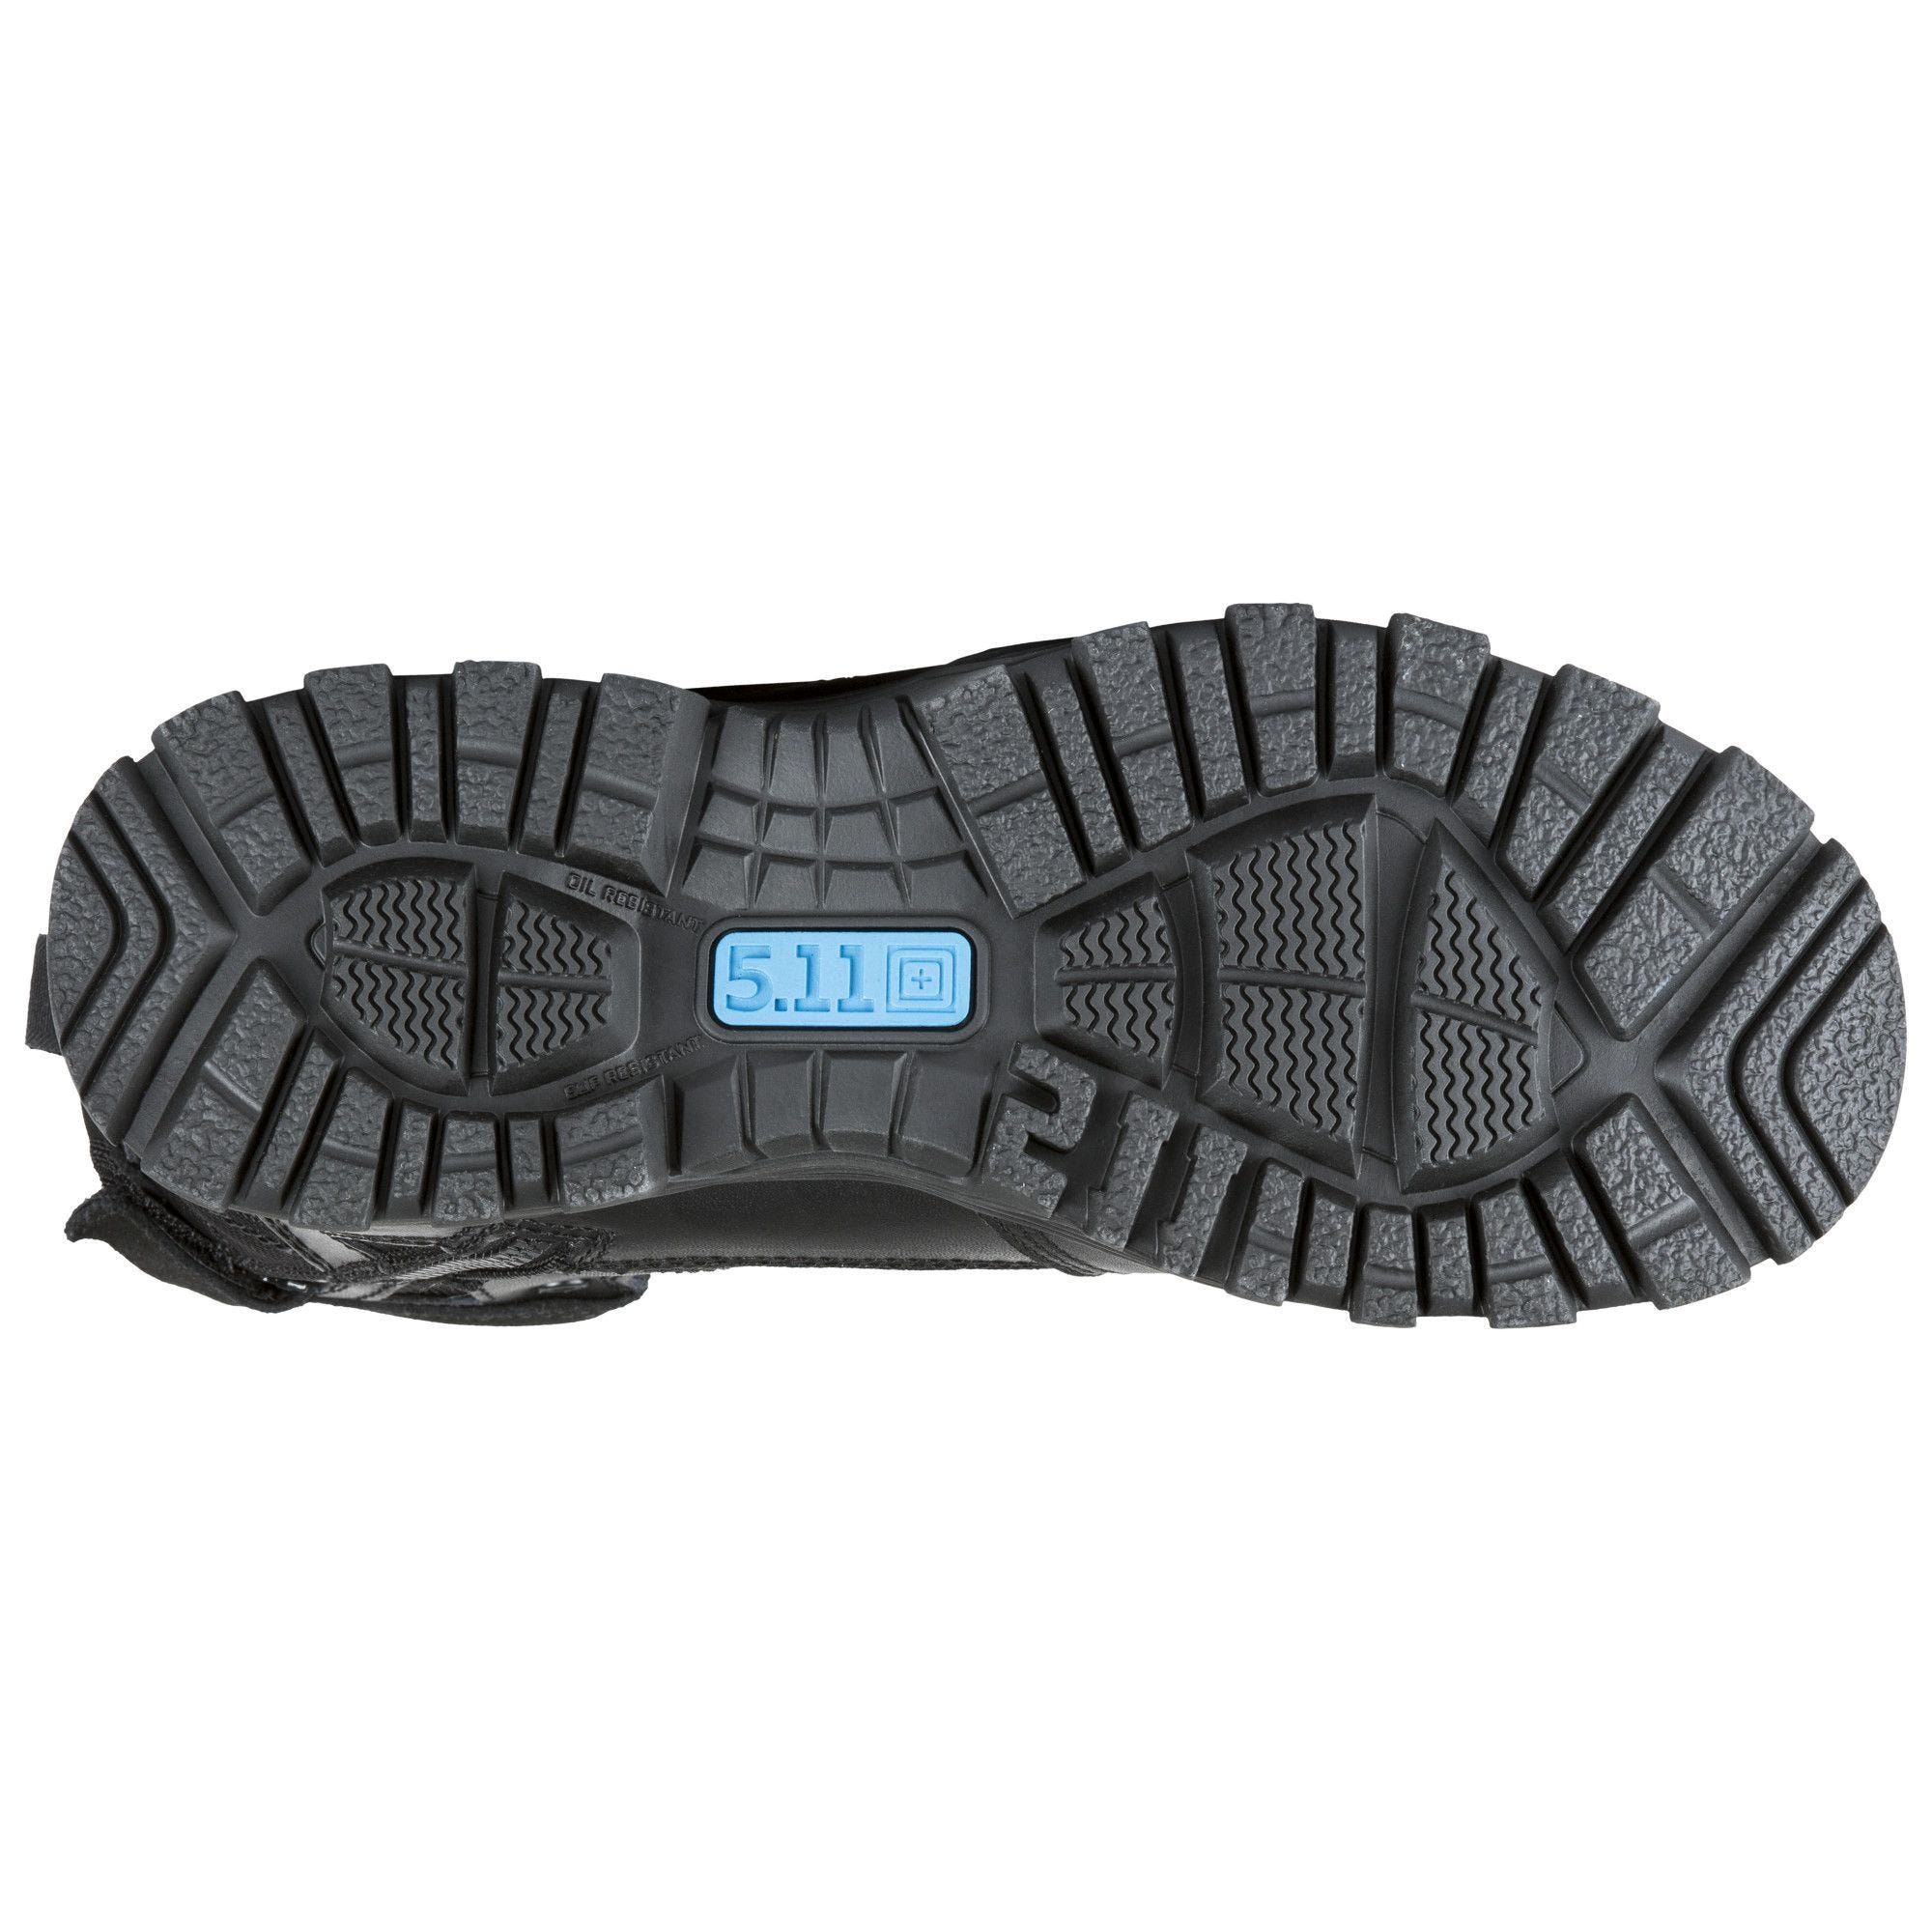 5.11 Tactical EVO 6-inch Waterproof SideZip Boots Footwear 5.11 Tactical Tactical Gear Supplier Tactical Distributors Australia